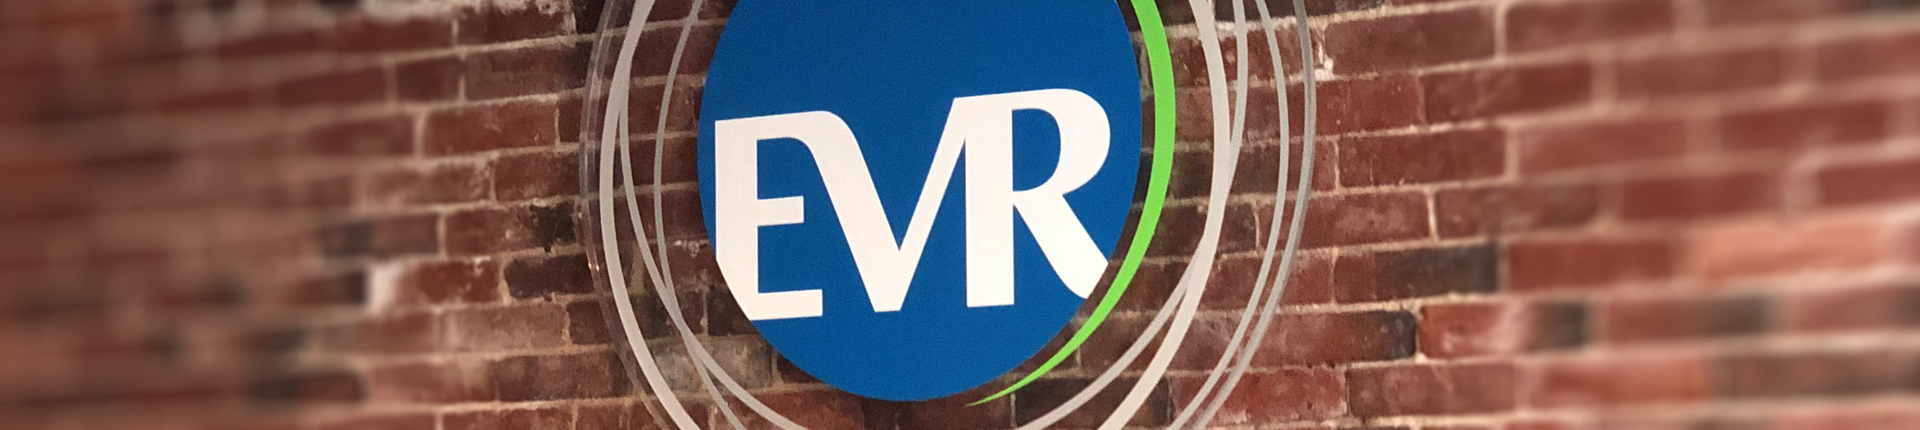 EVR logo on brick